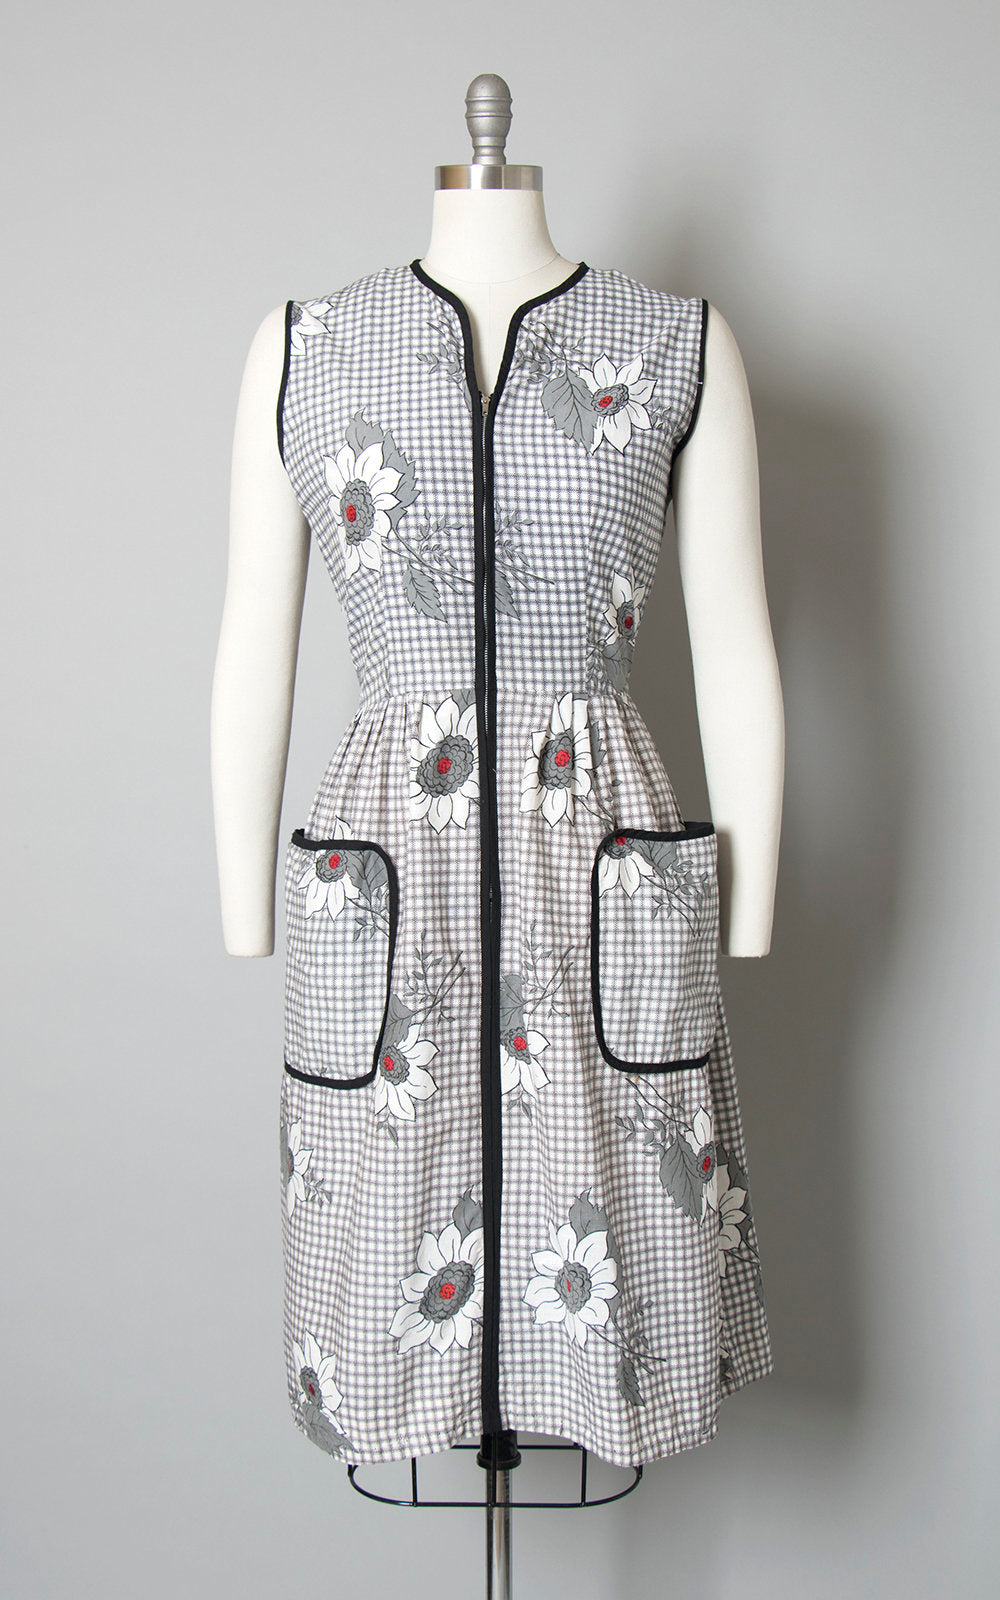 Vintage 1950s Dress | 50s Floral Printed Cotton Sundress Windowpane Plaid White Black Full Skirt Day Dress with Pockets (medium)